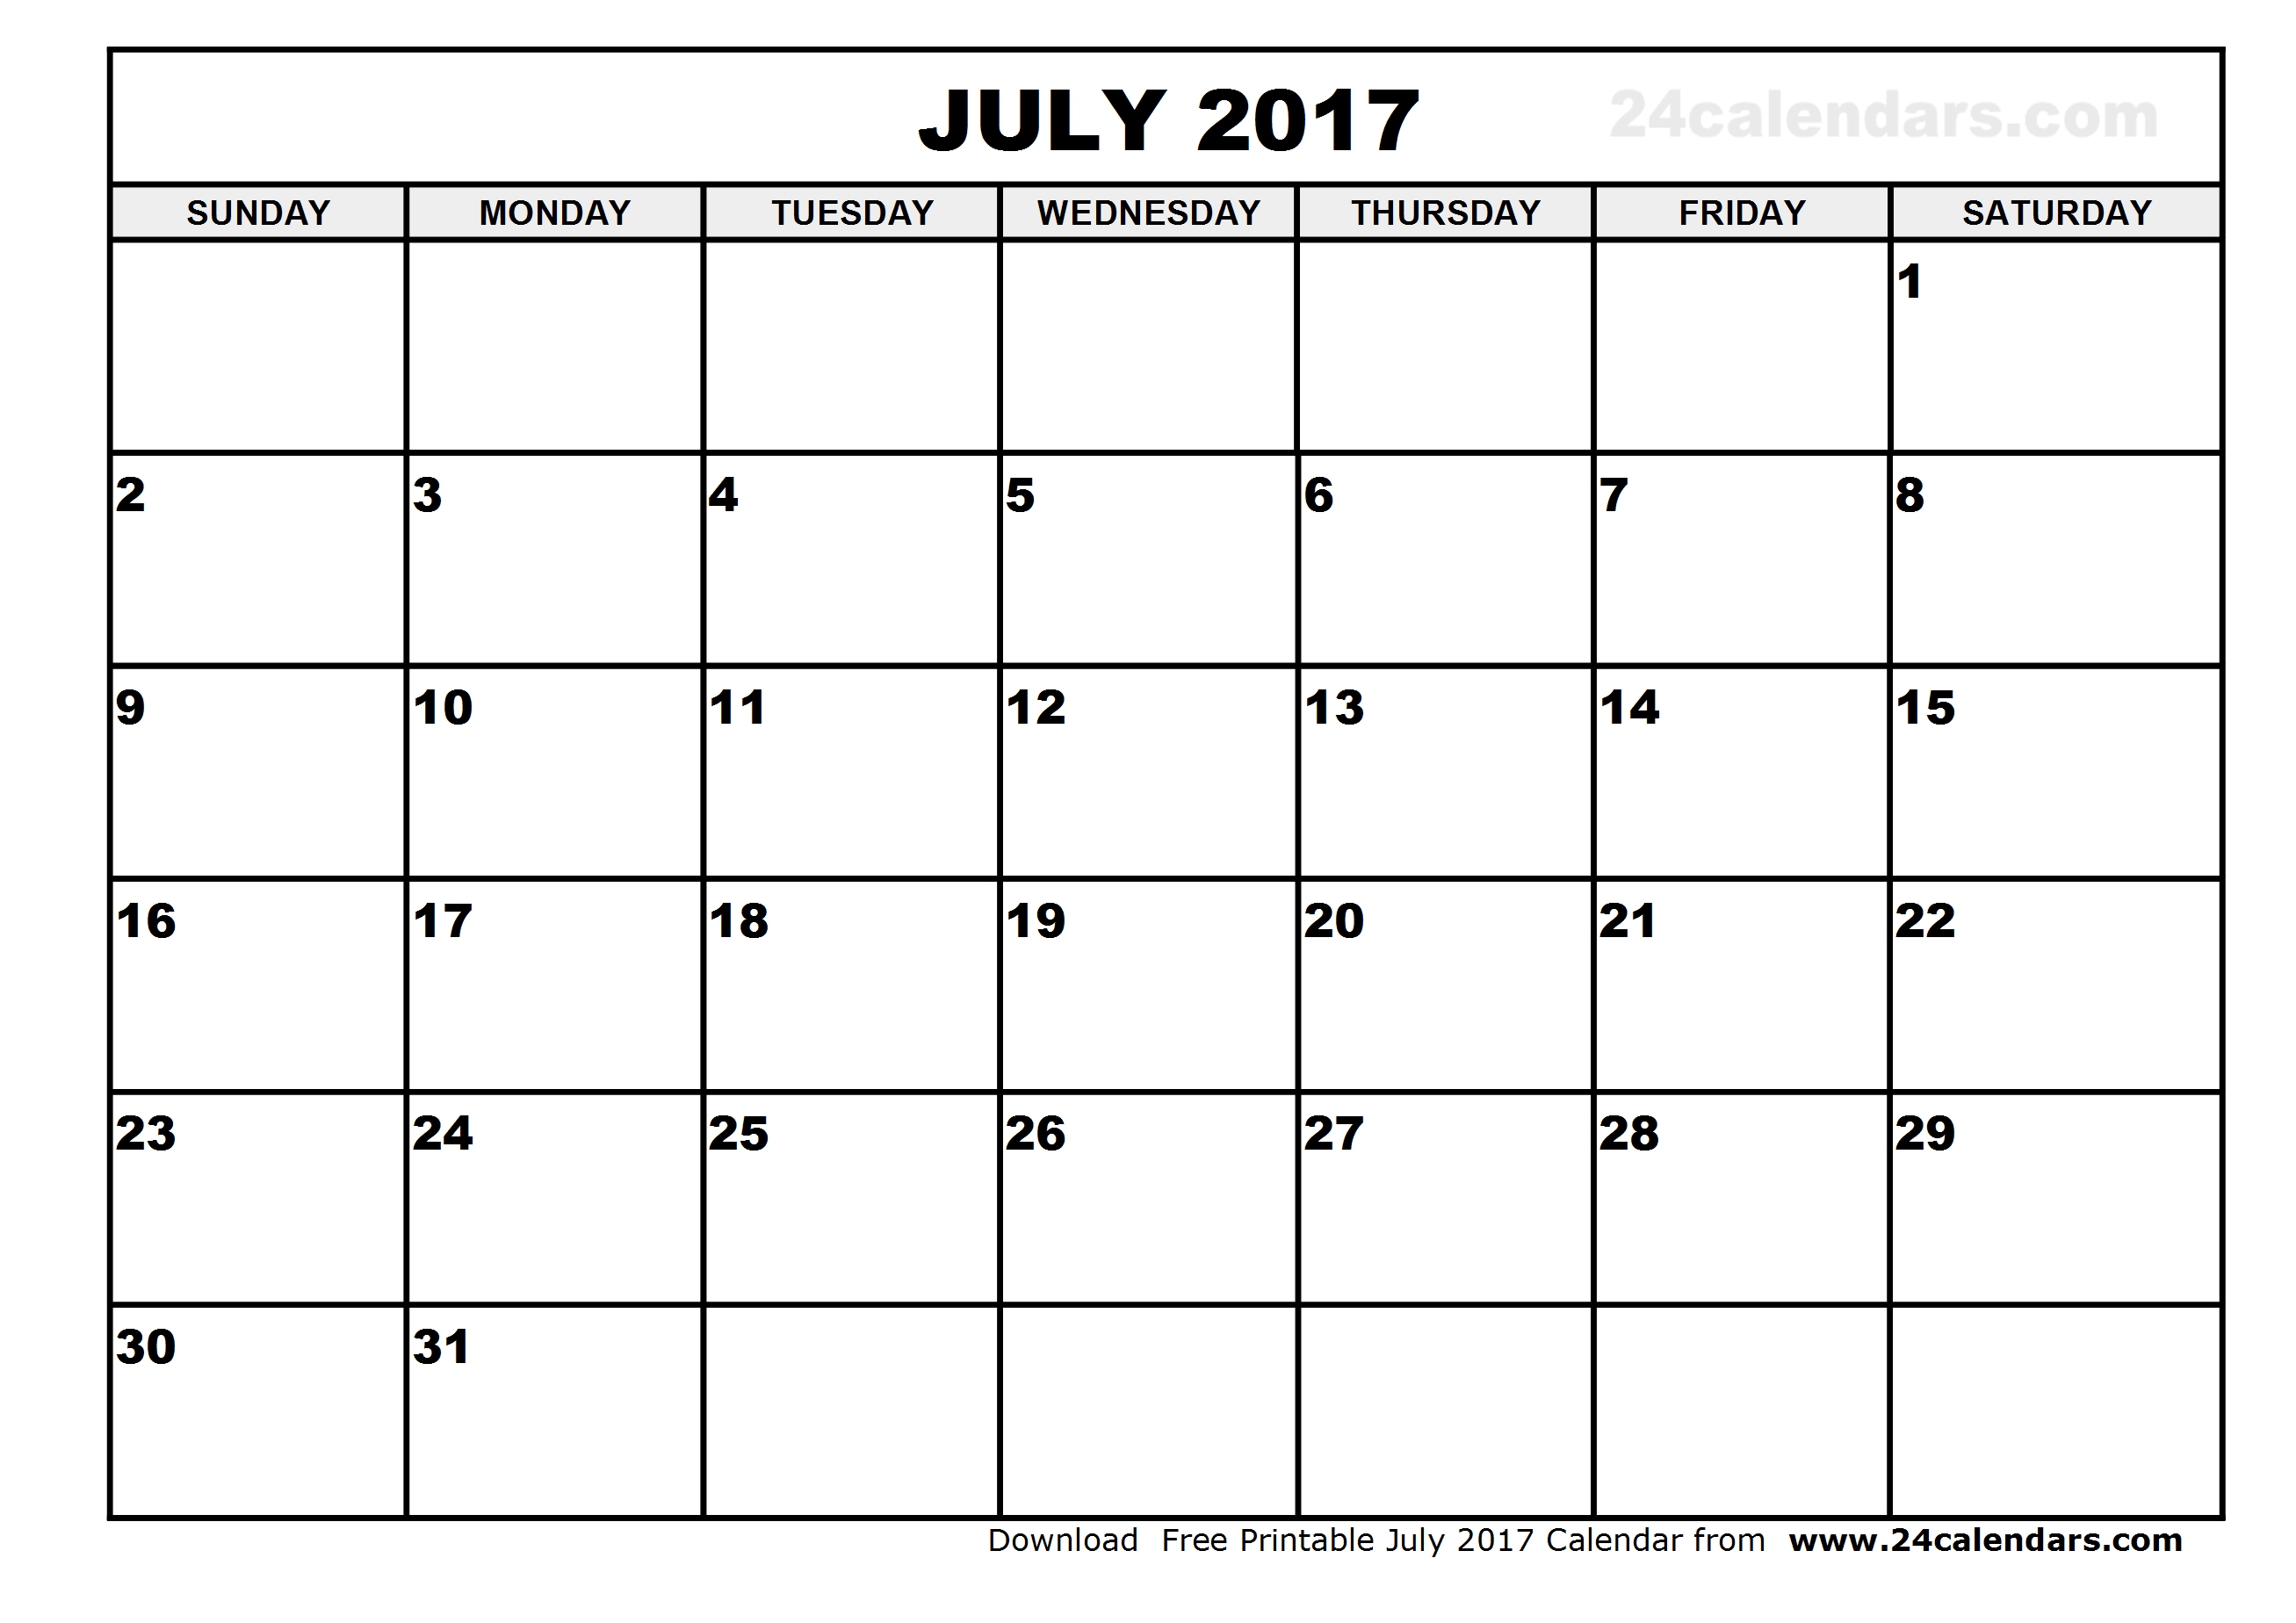 July 2017 Calendar Pdf | weekly calendar template